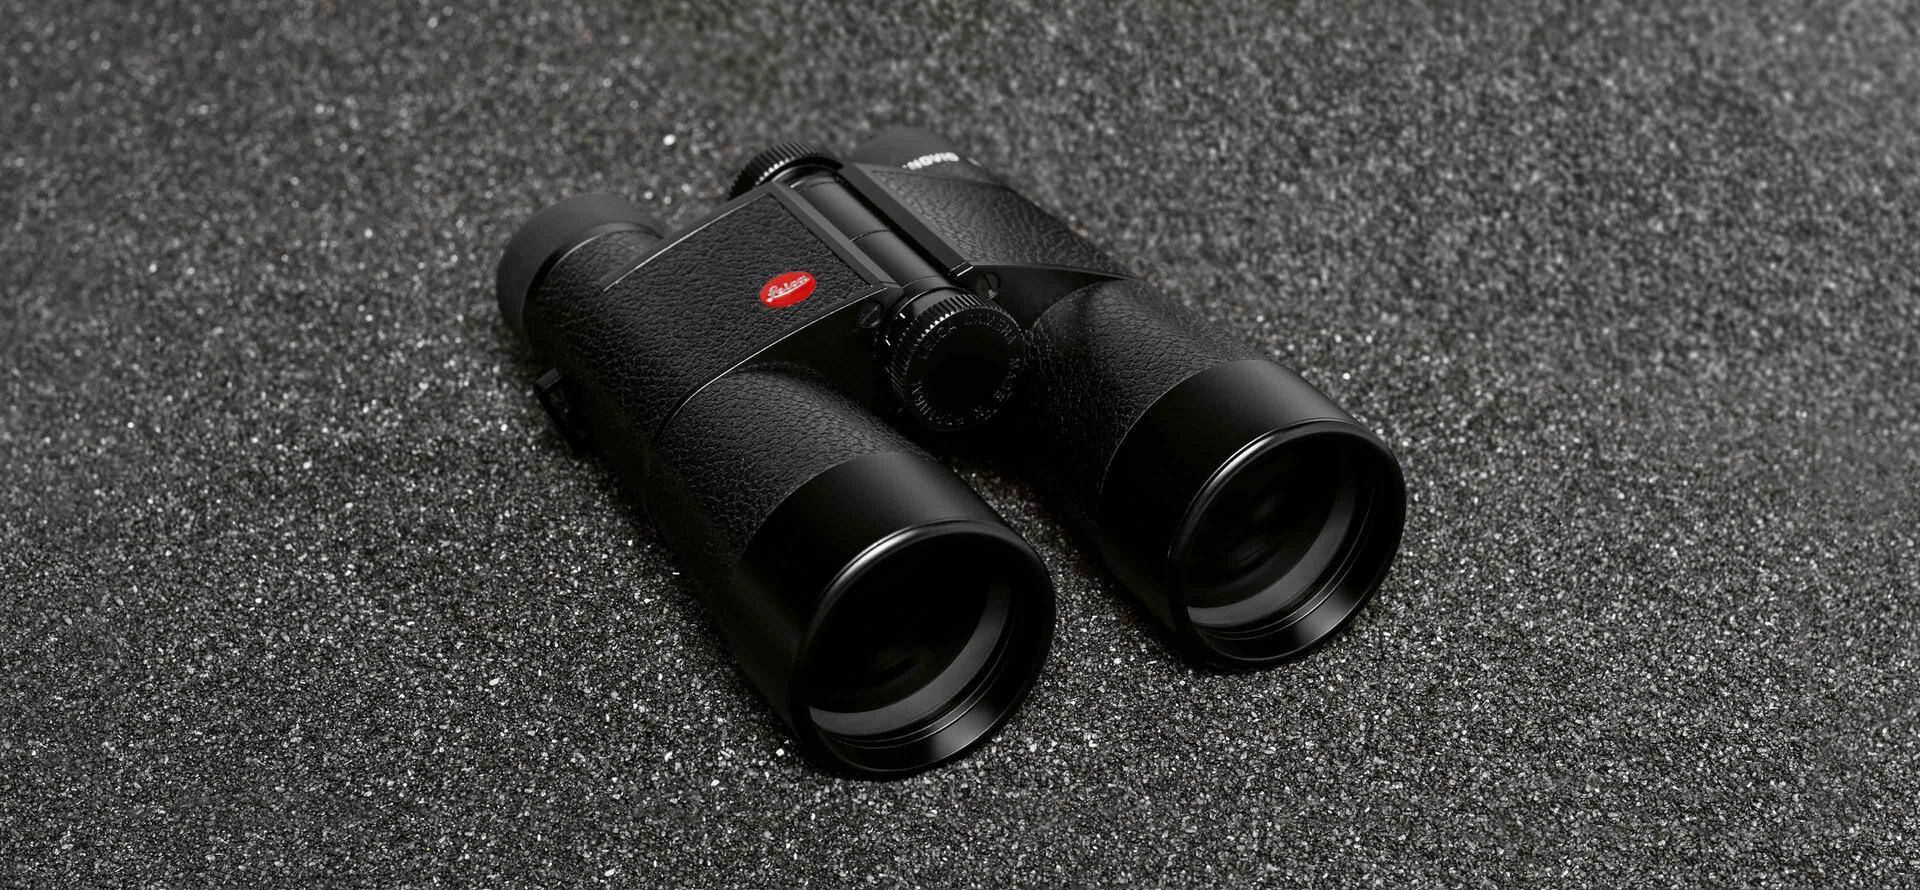 Leica Trinovid - Binoculars - Lifestyle & Leisure - Sport Optics